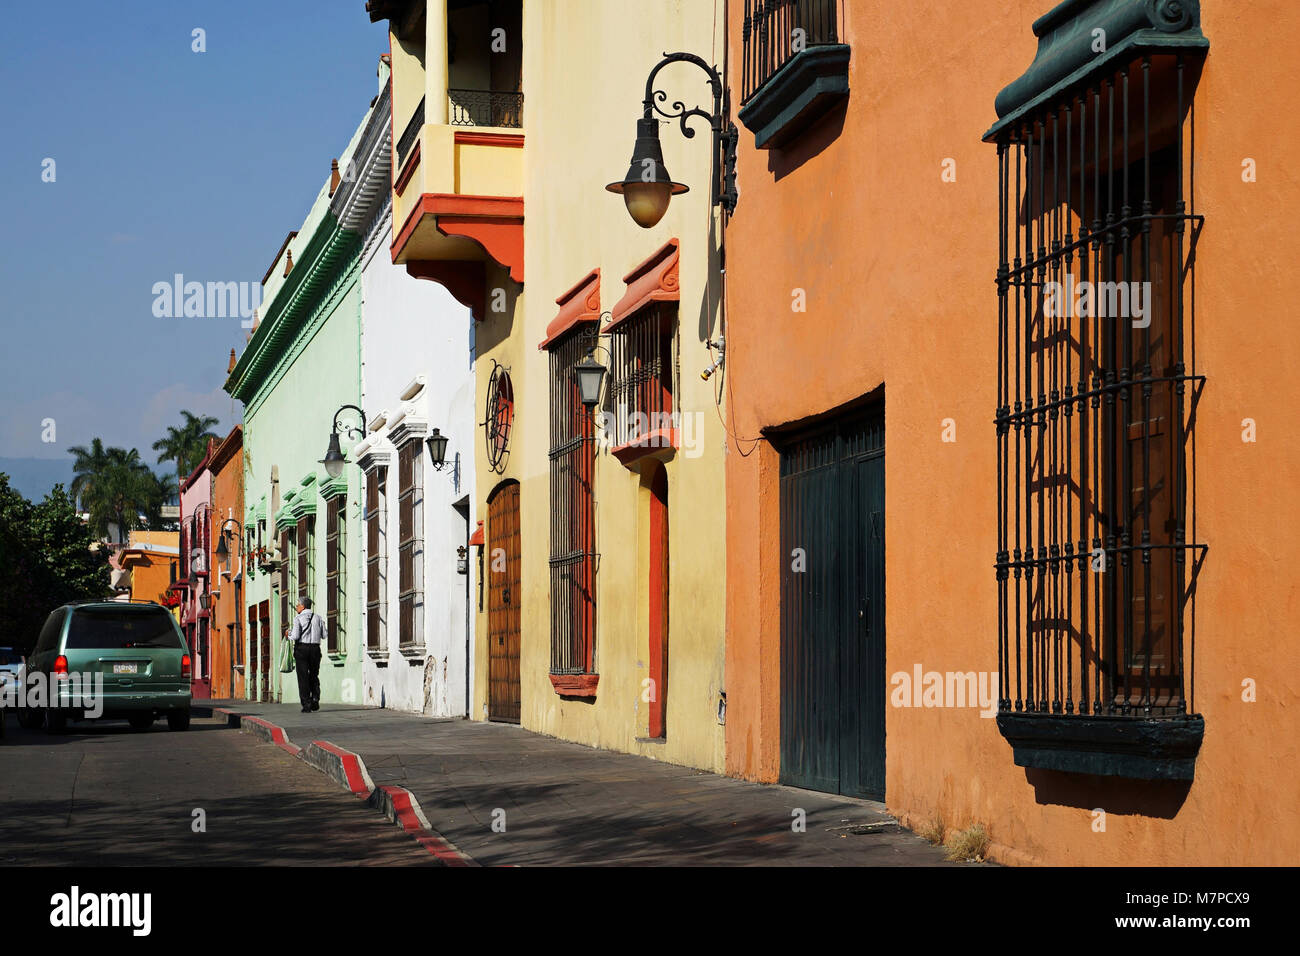 A street with multicolored buildings in Cuernavaca, Mexico. Stock Photo